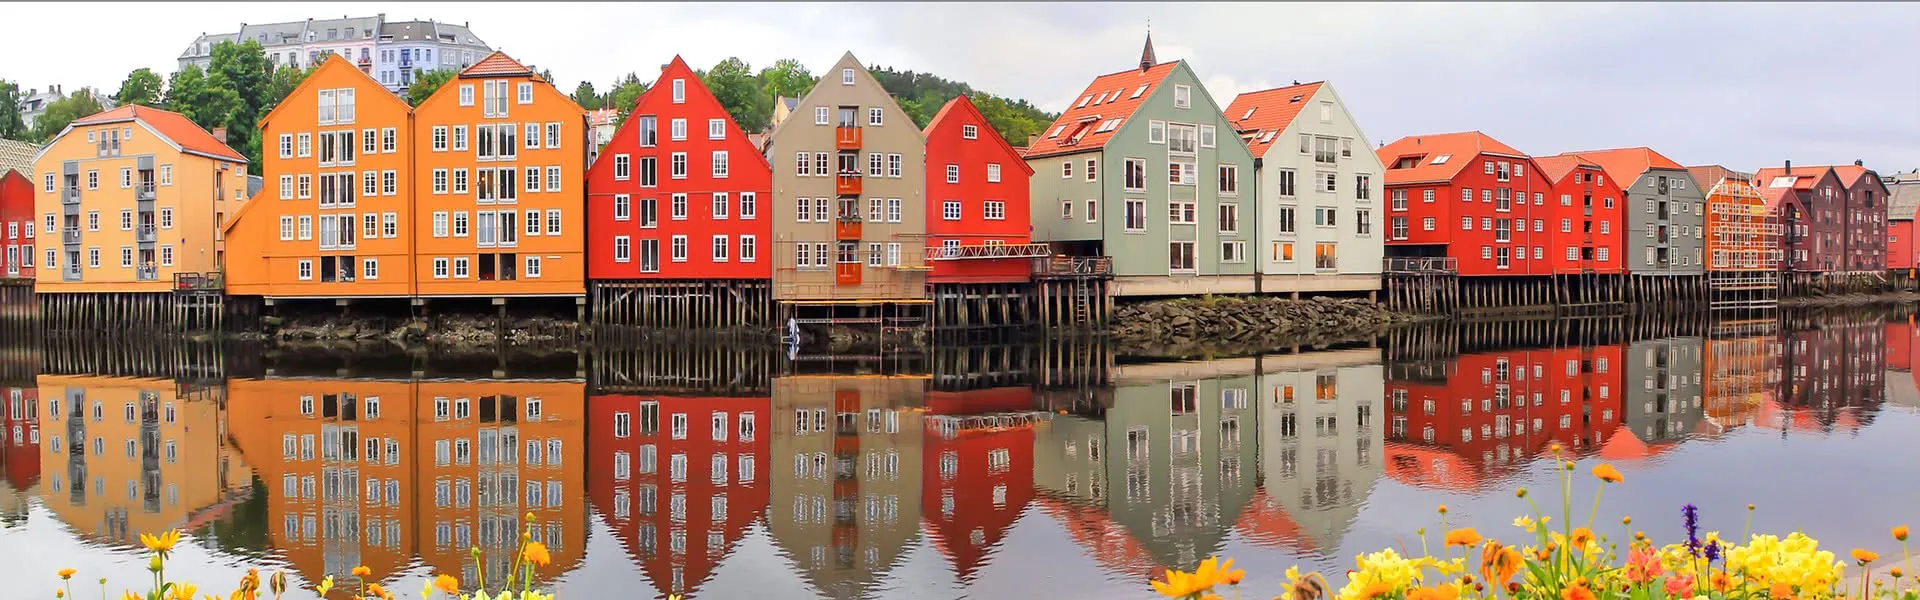 Trondheim - the destination for school trips